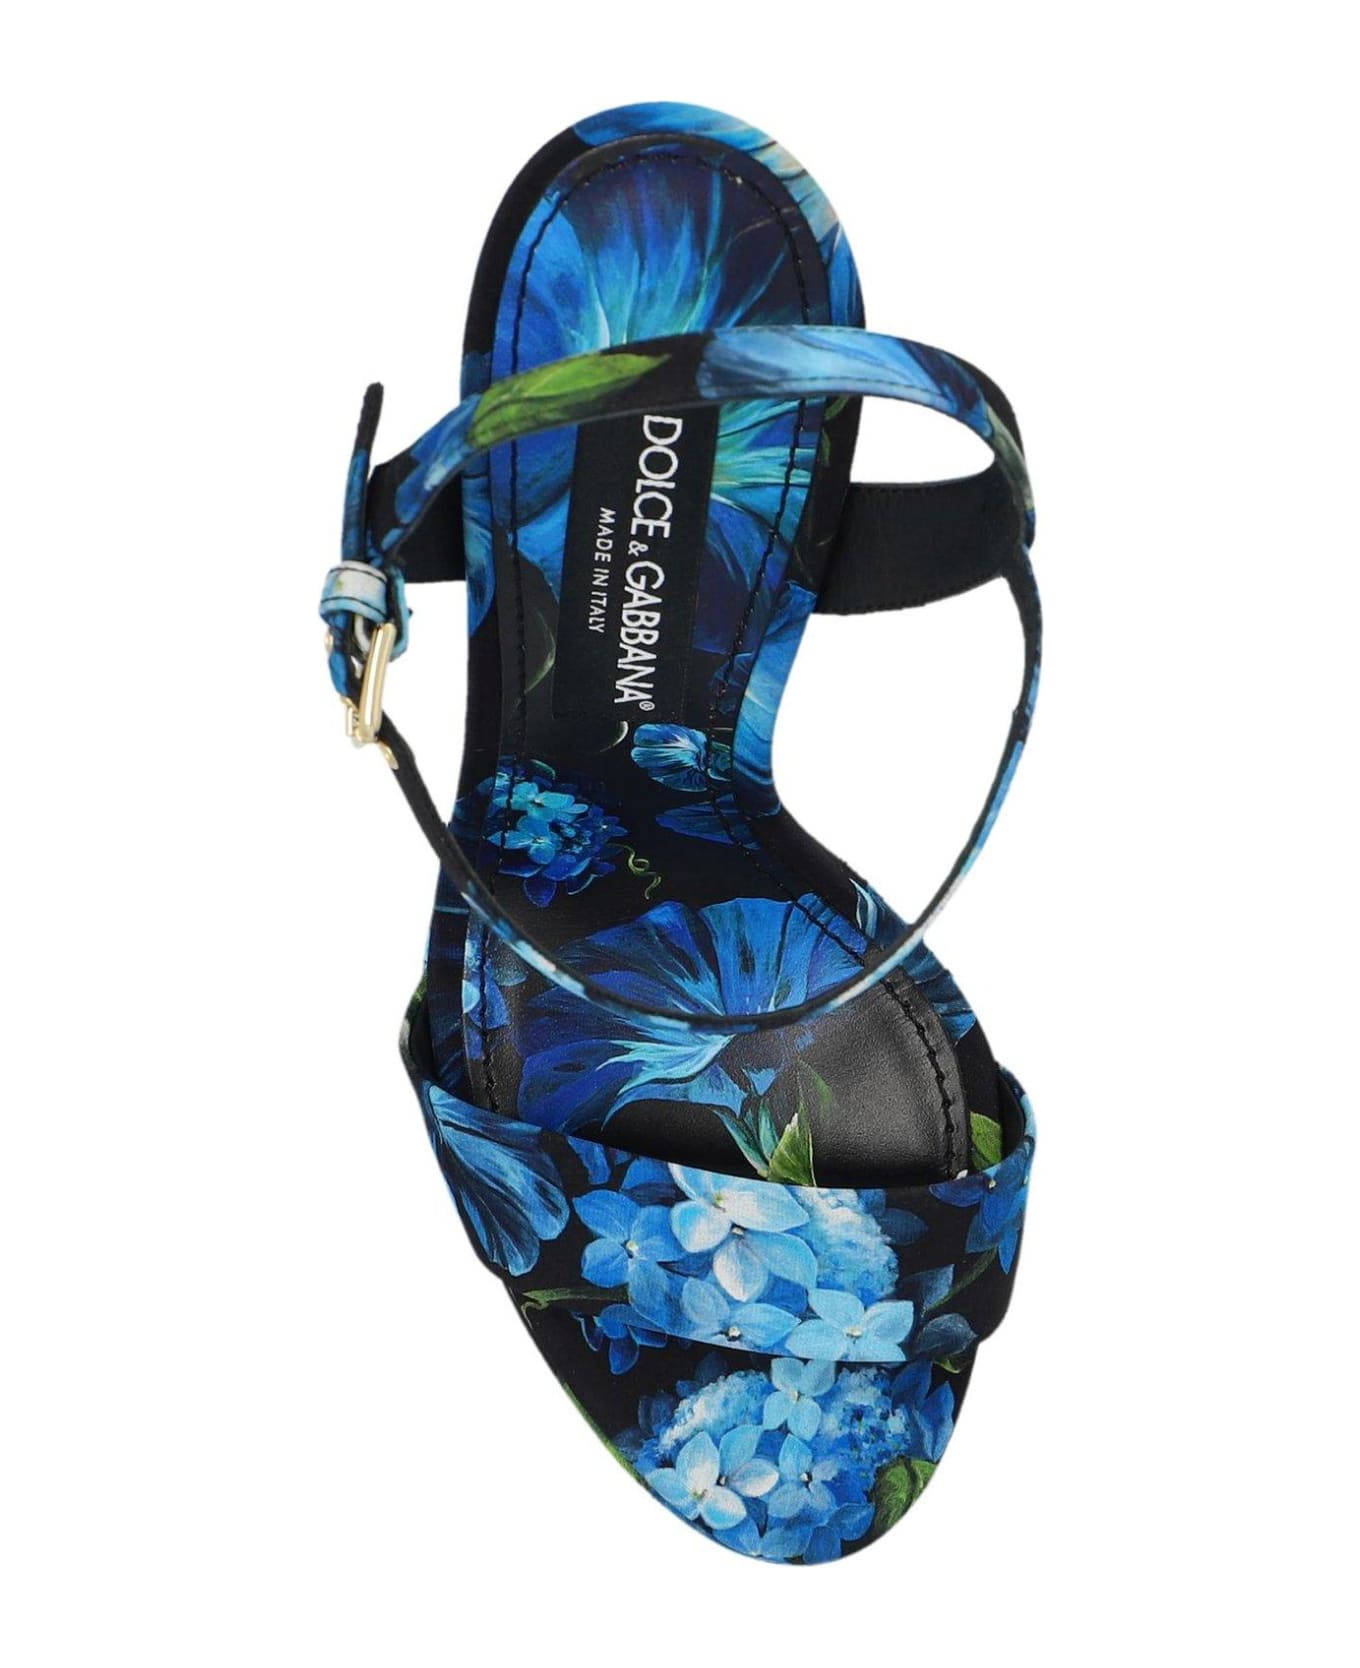 Dolce & Gabbana Charmeuse Platform Sandals - CAMPANULE FDO NERO サンダル